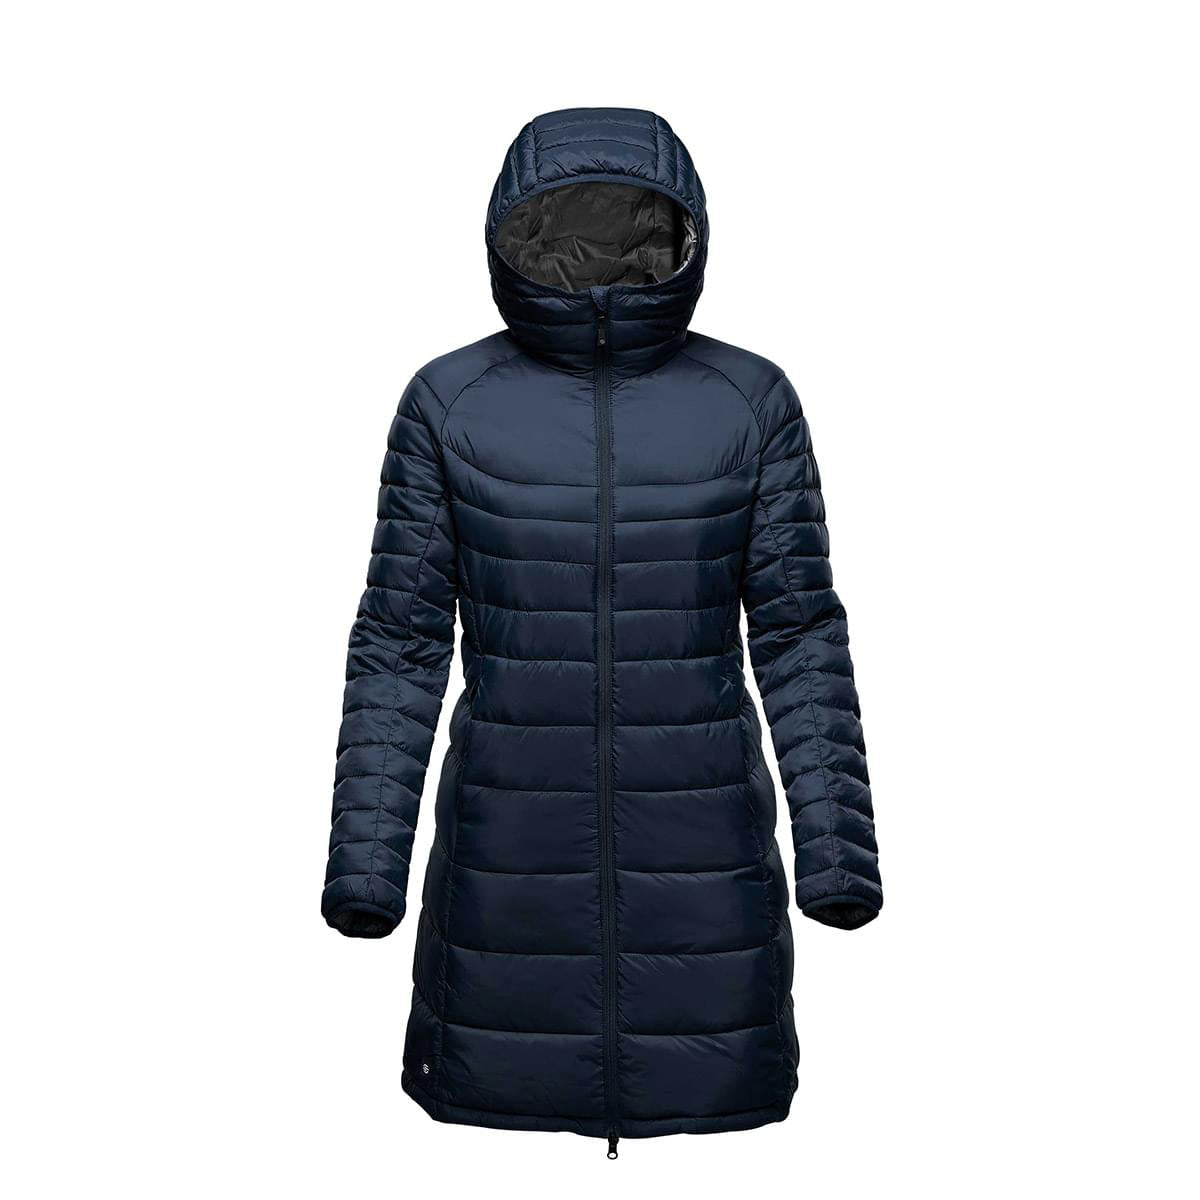 Women's Winter Jacket - Mirabella Parka